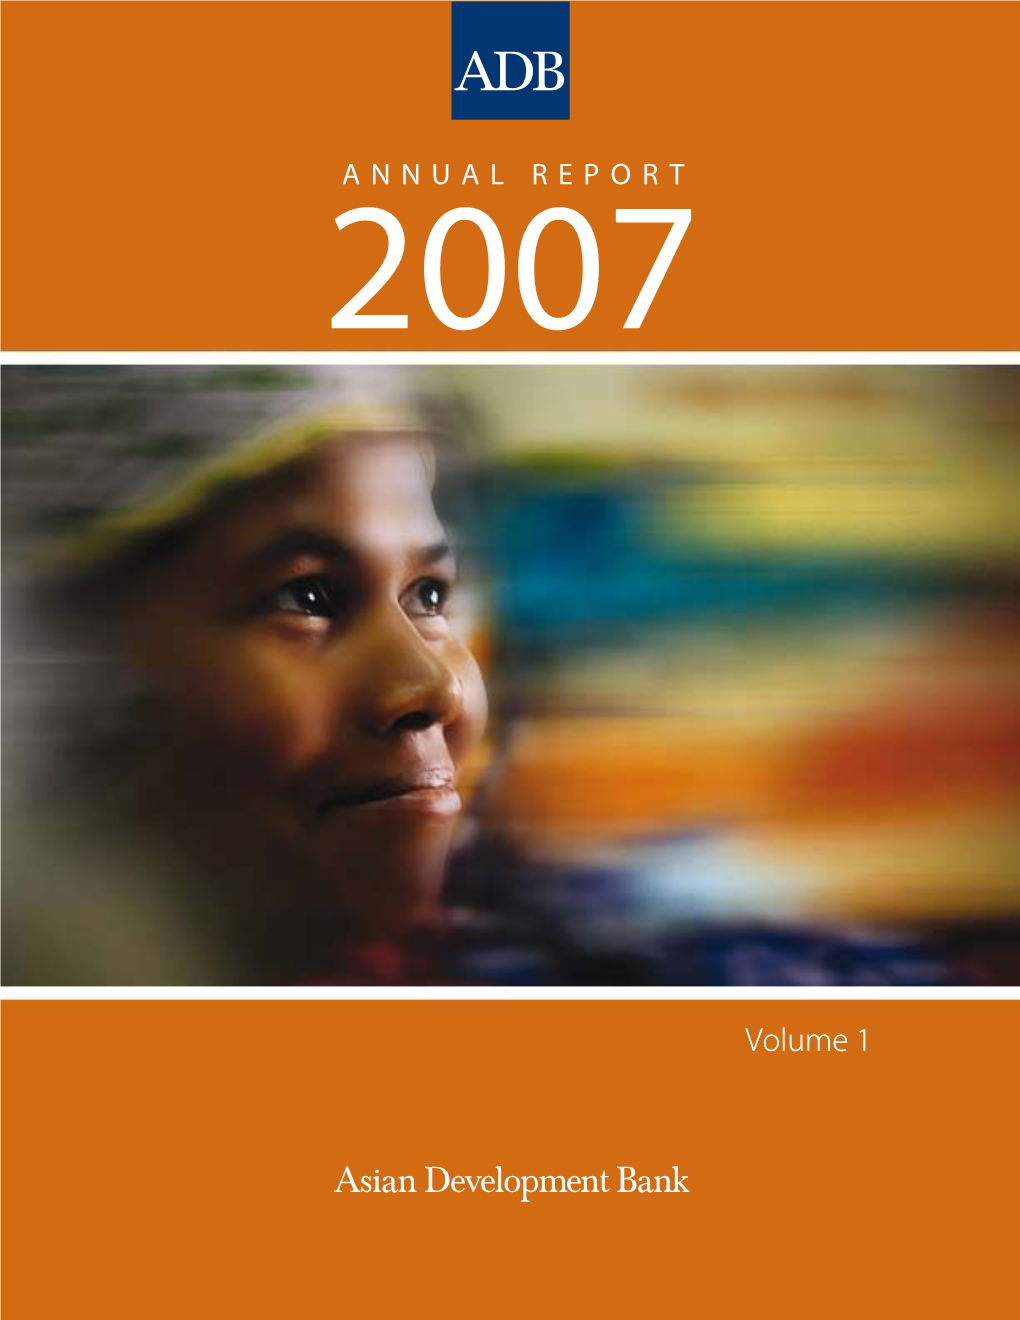 ADB's Annual Report 2007